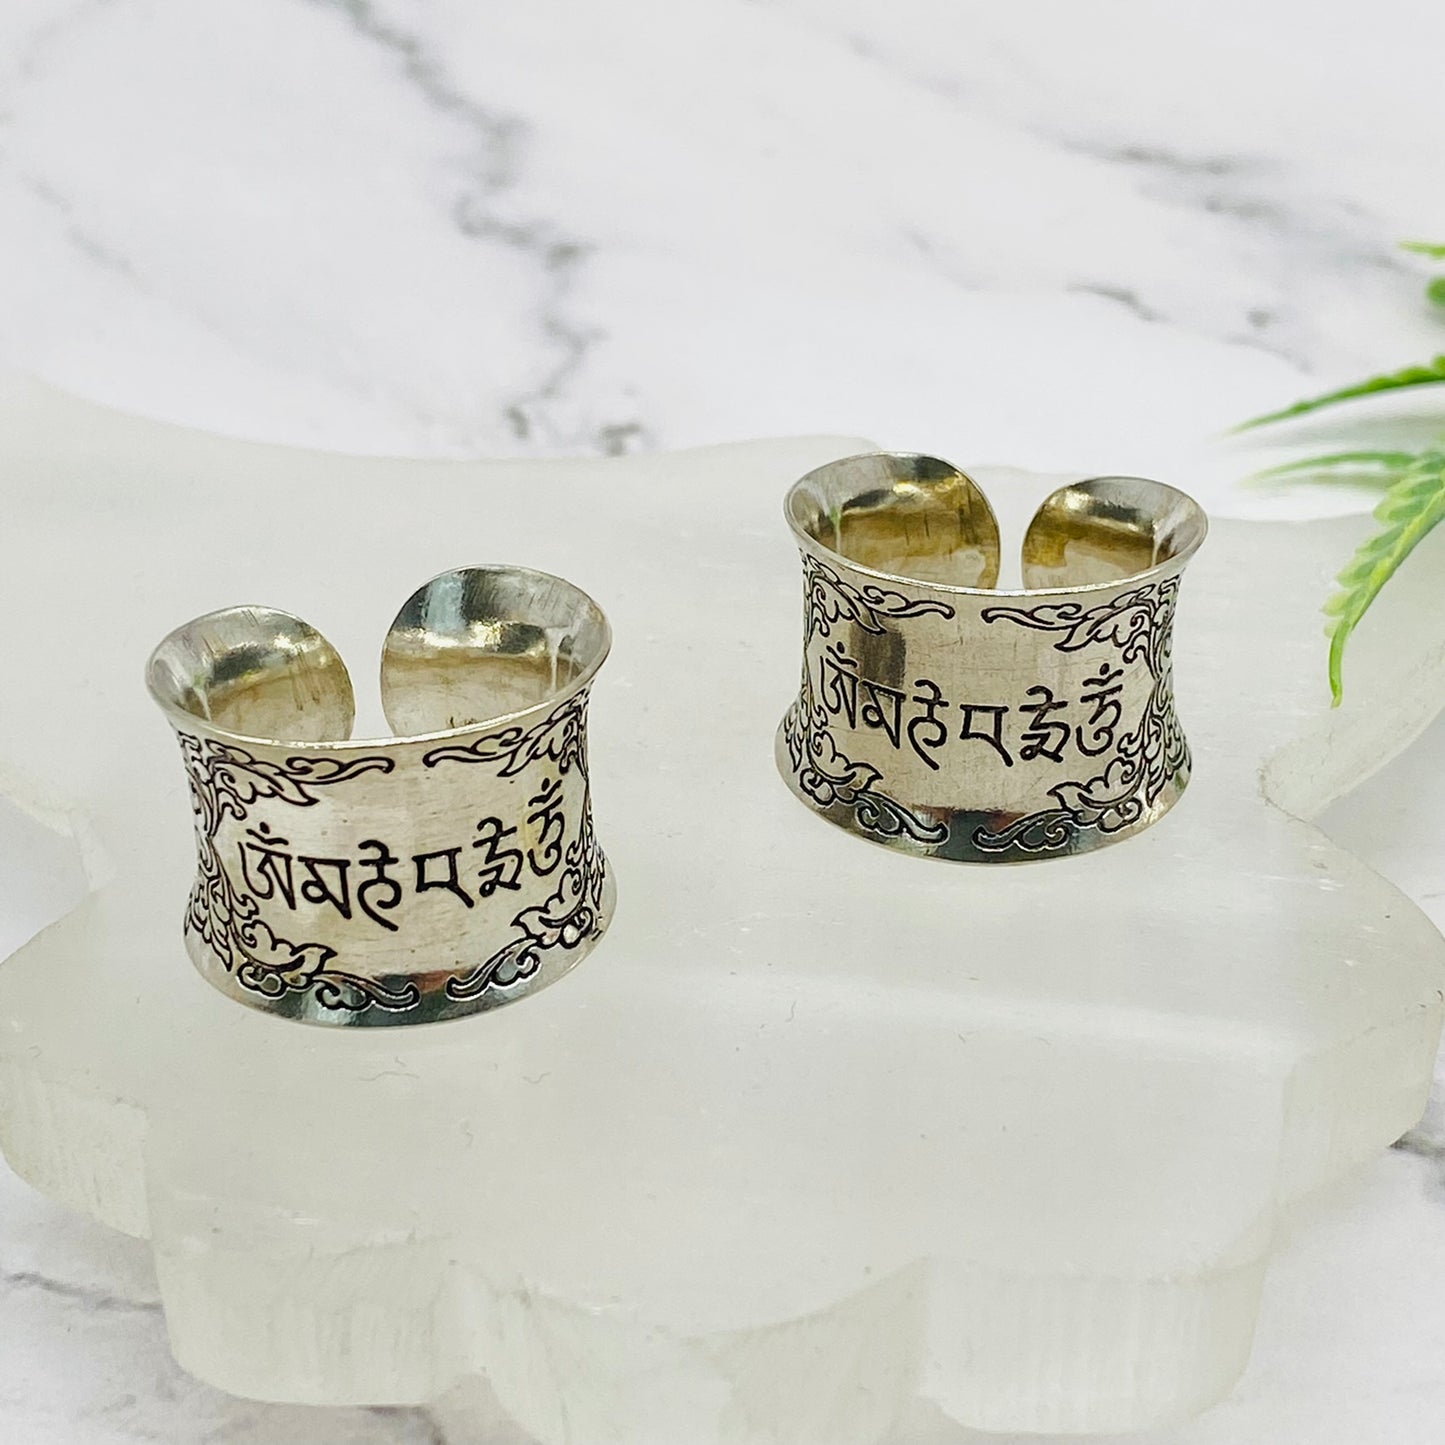 Tibetan Buddhist Healing Mantra Ring, Compassion Ring, Om Mani Pad Mi Hu Mantra Adjustable Ring, Buddhist Ring, Meditation Ring